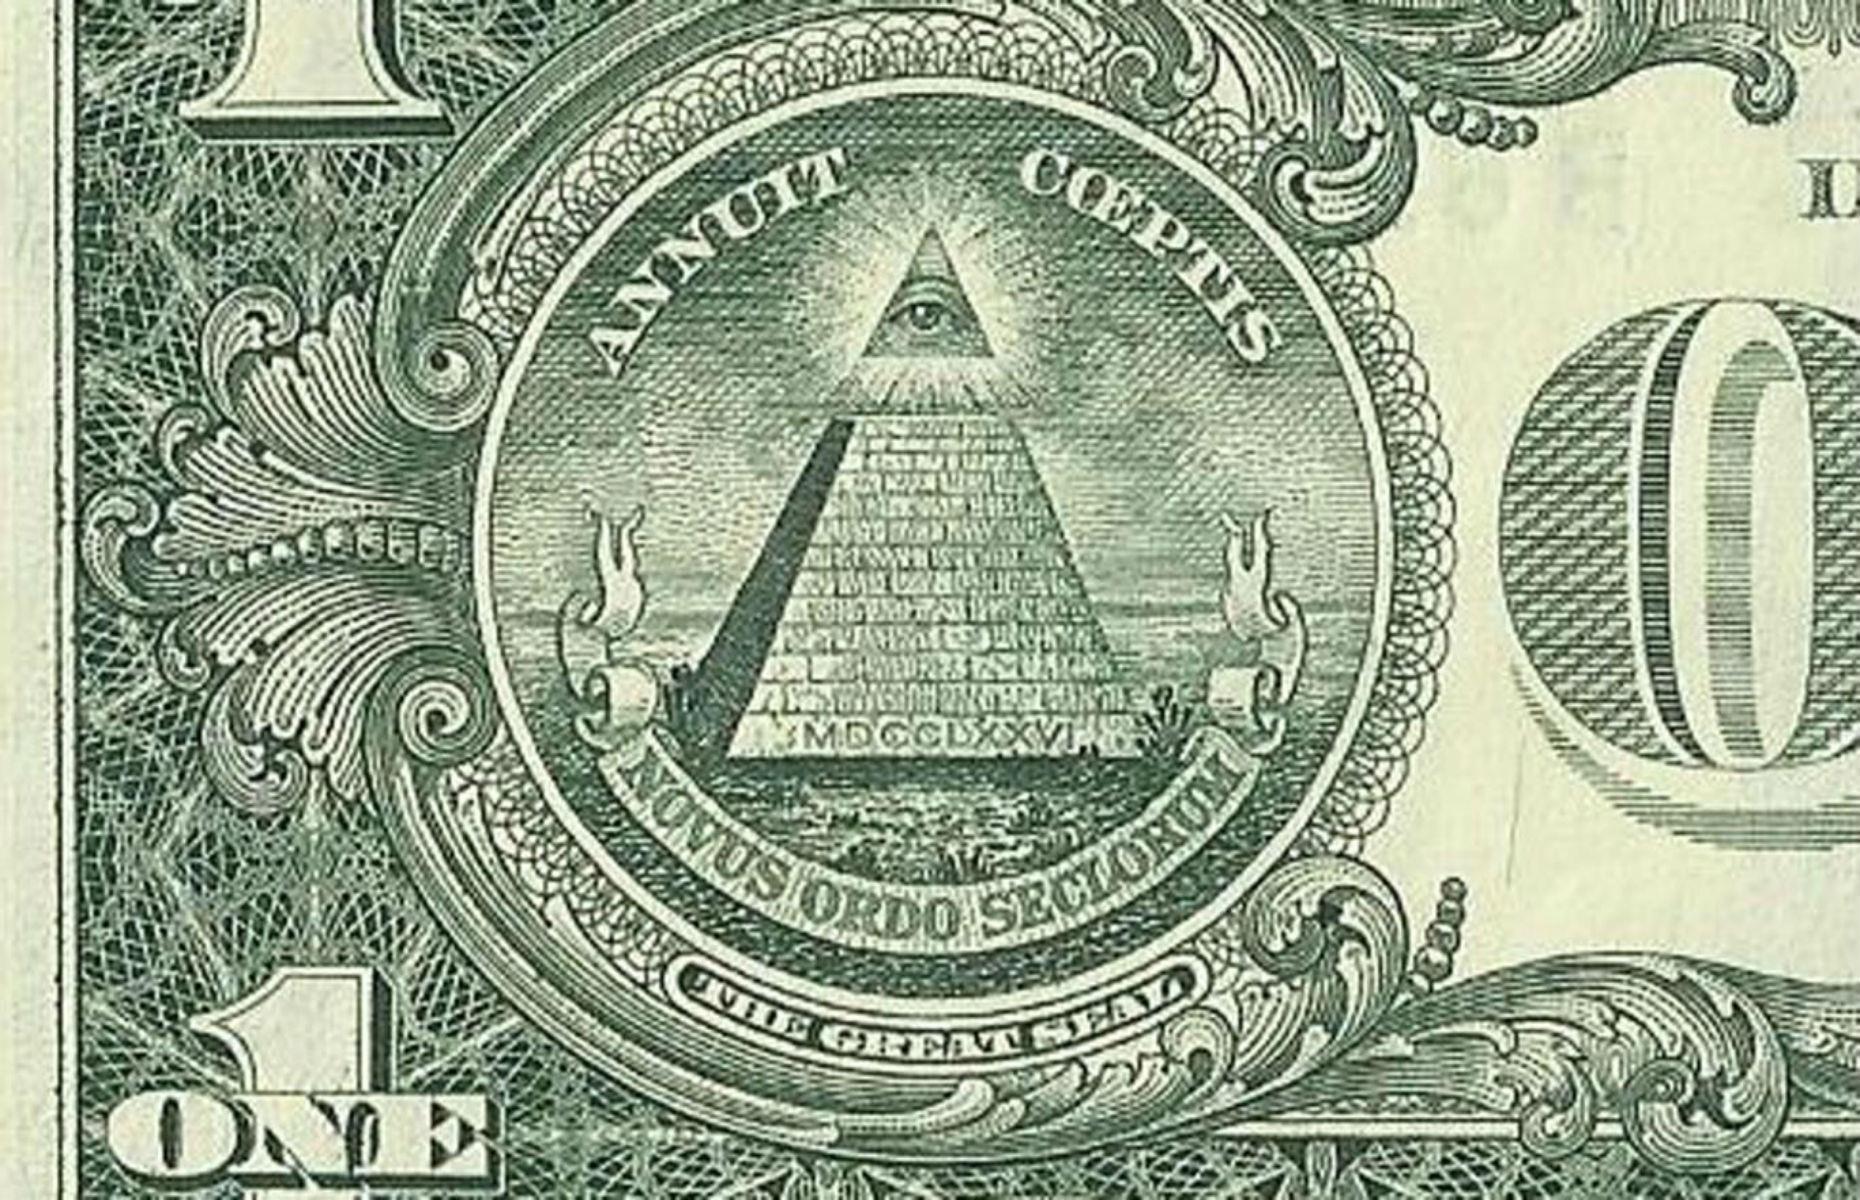 US $1 bill: pyramid